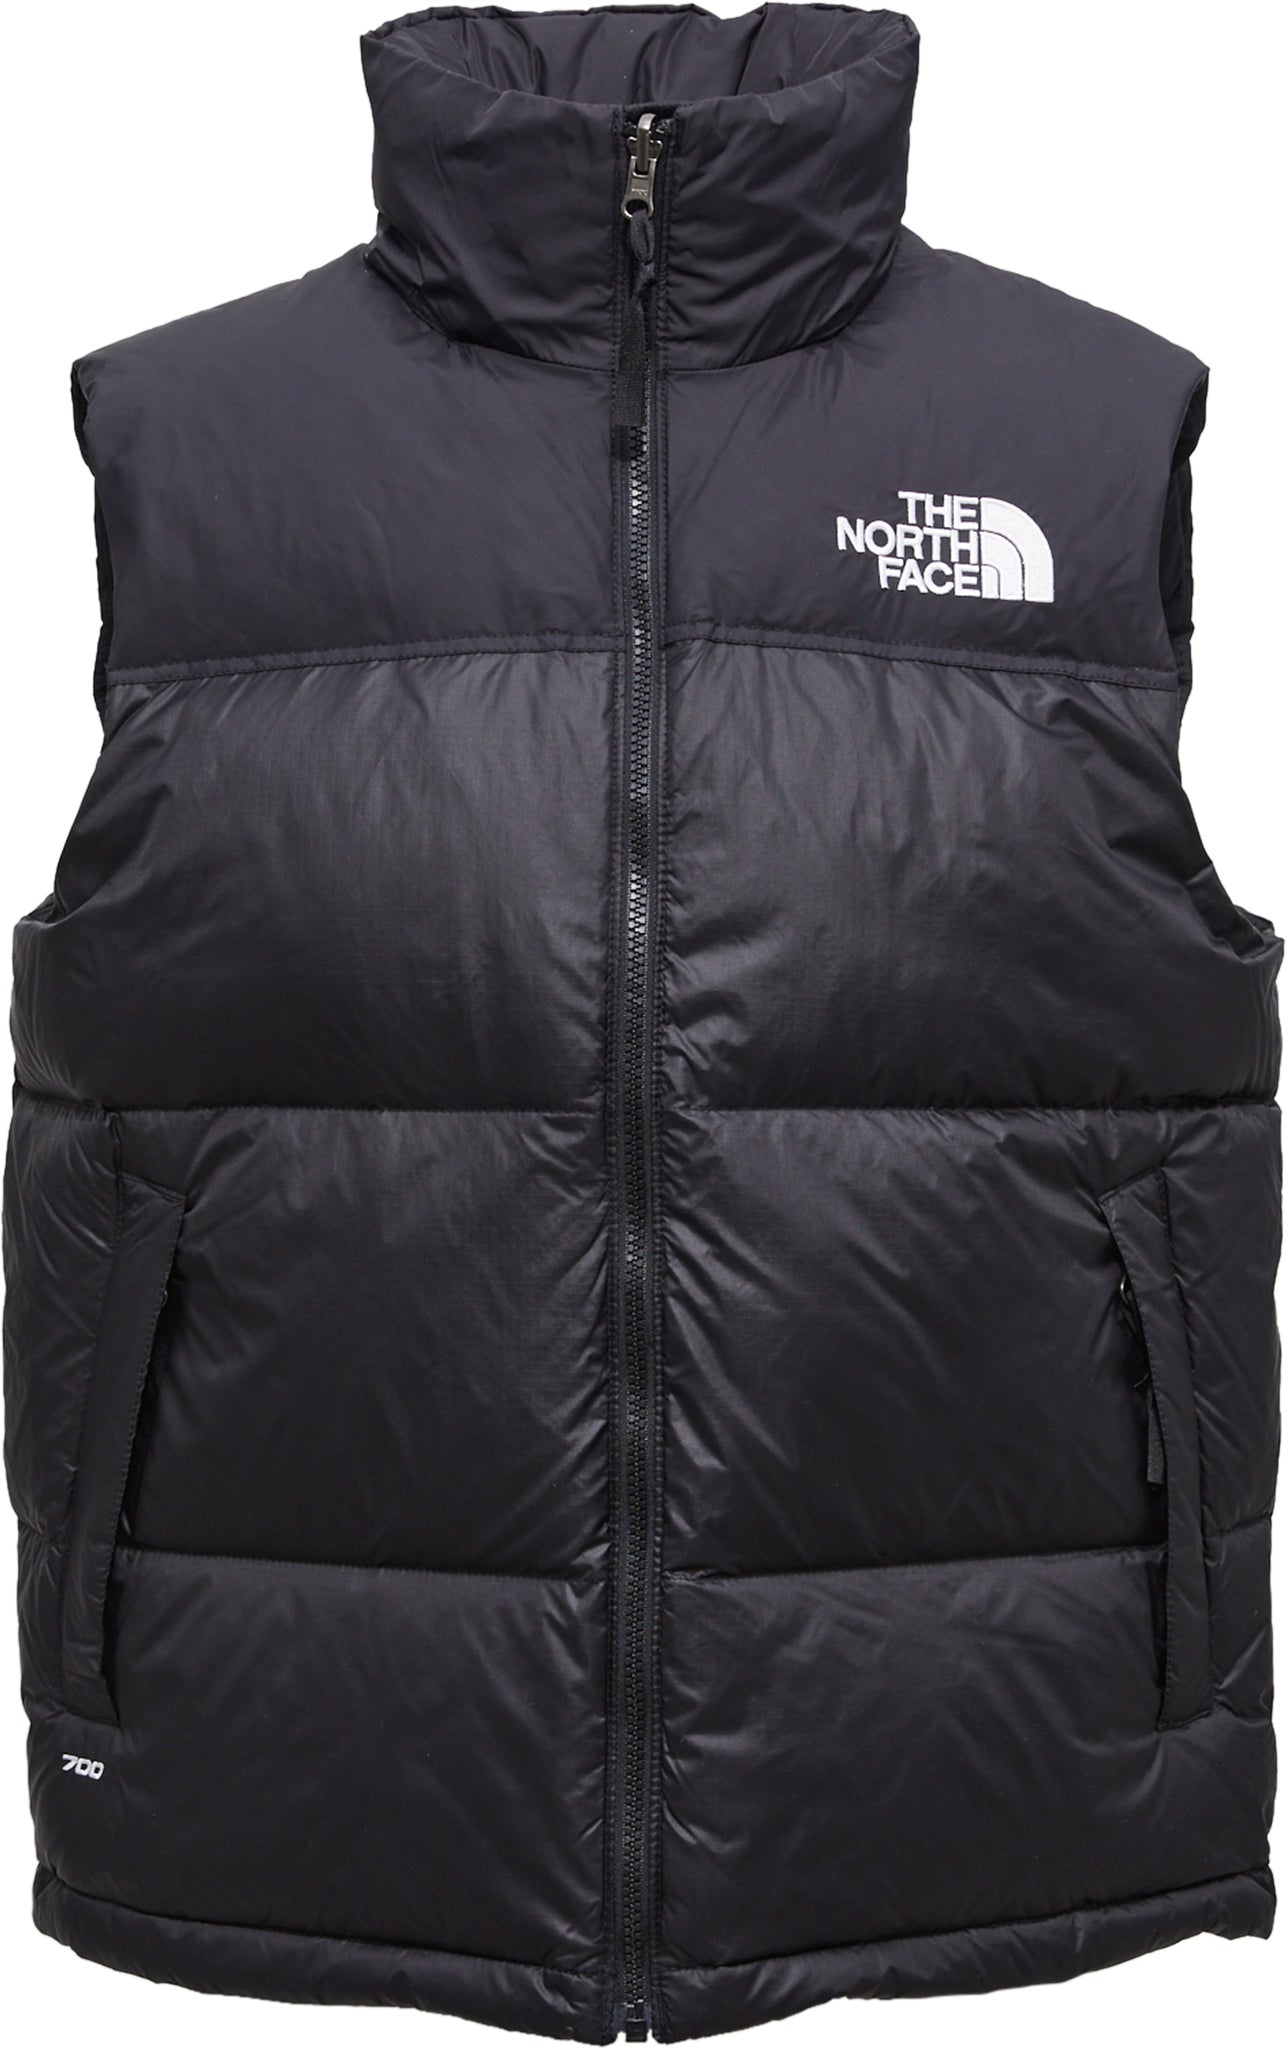 Shop The North Face Nuptse Jacket | Altitude Sports